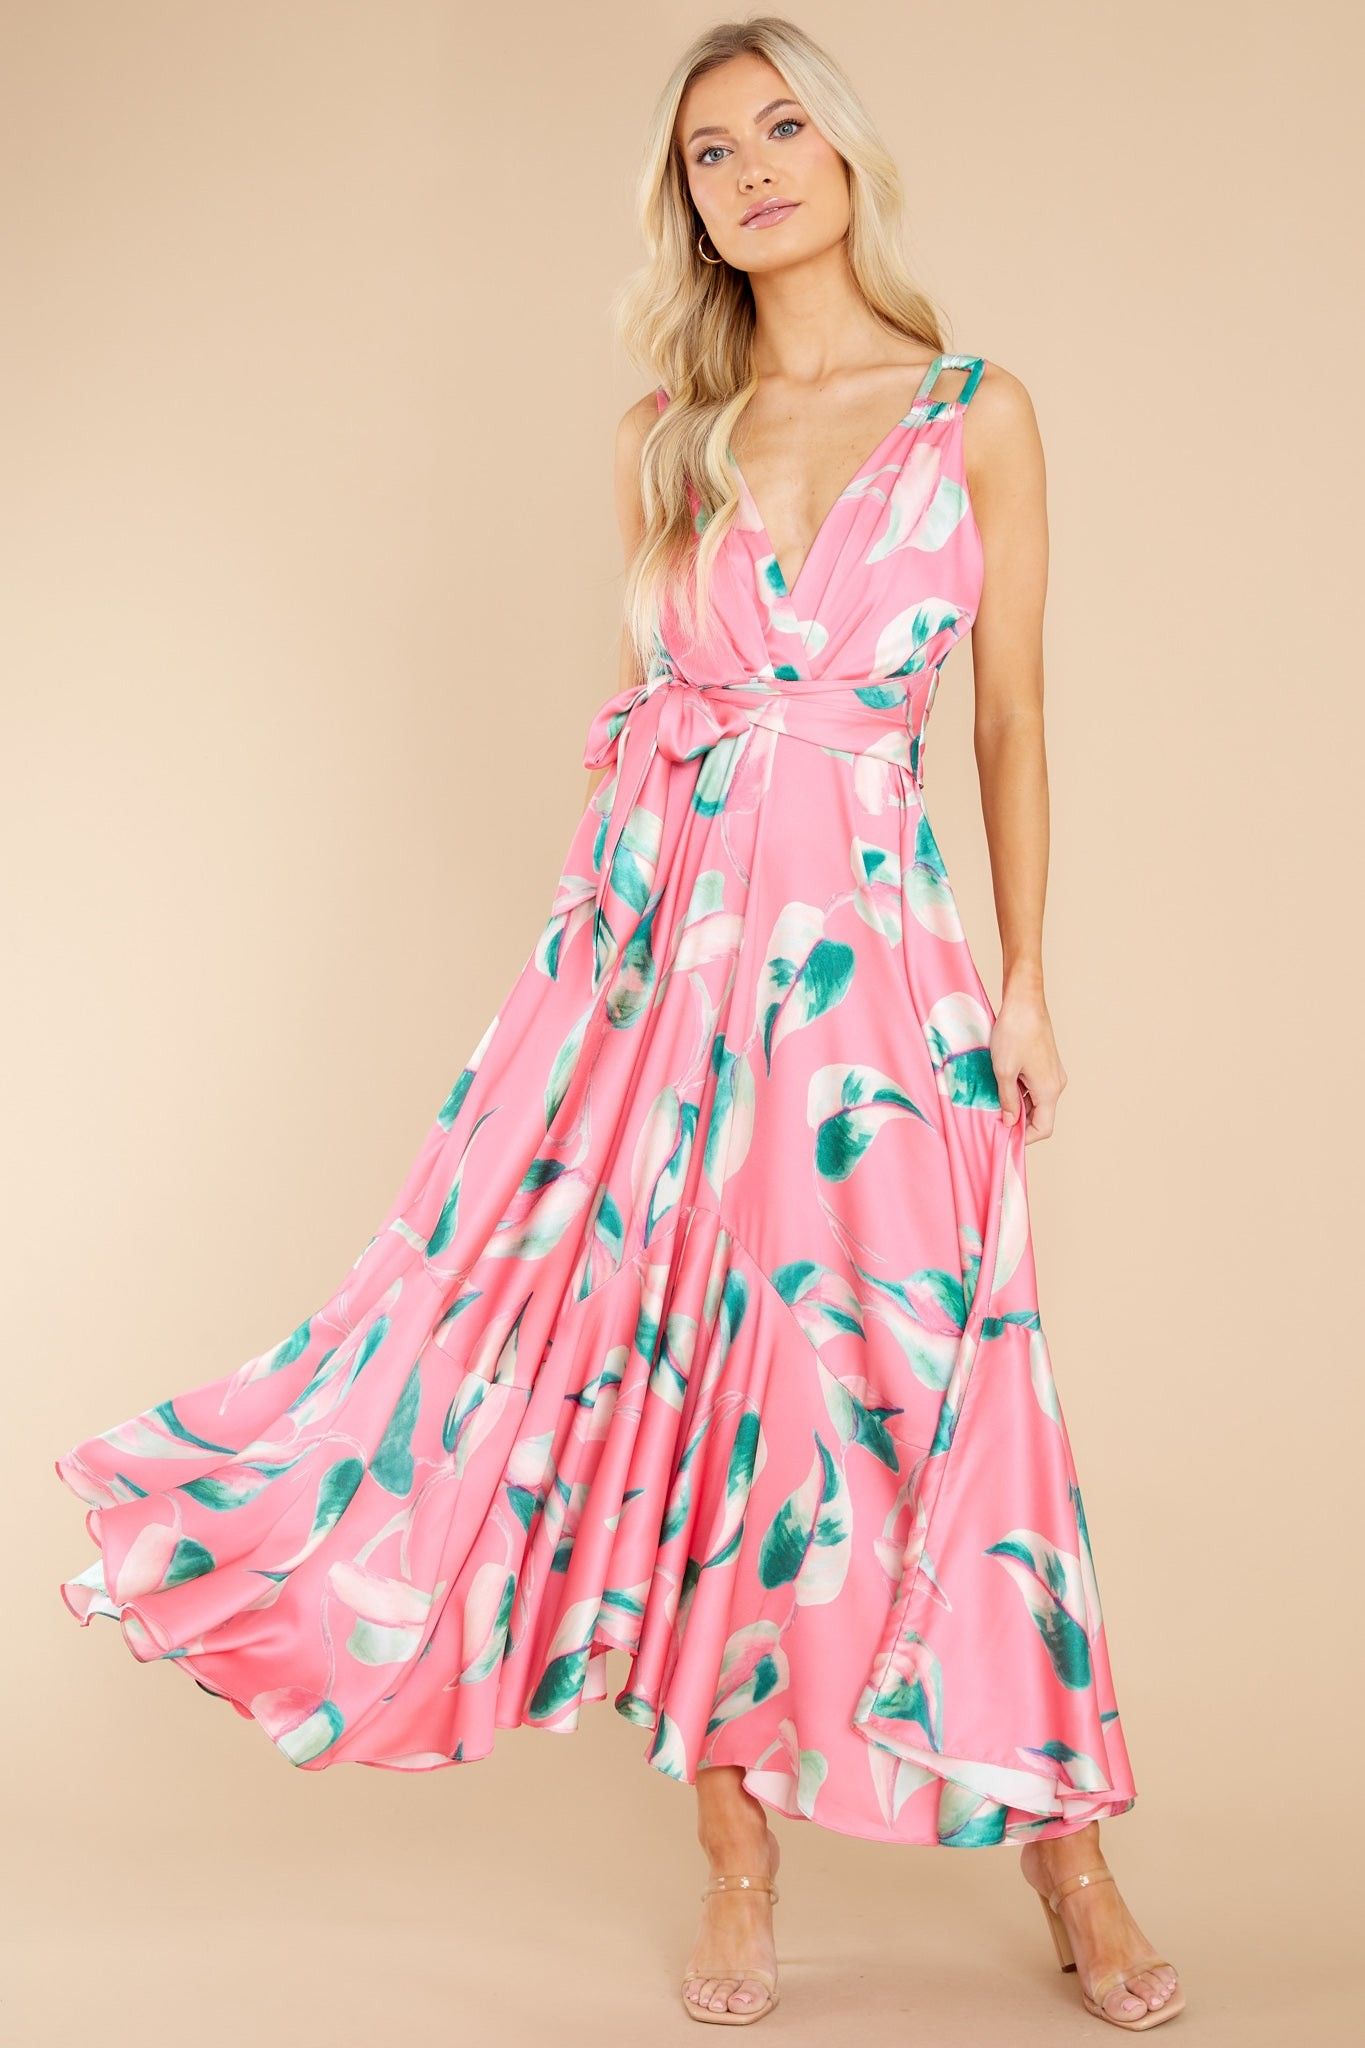 Call Me Sassy Pink Leaf Print Maxi Dress- Vacation Dress | Red Dress 